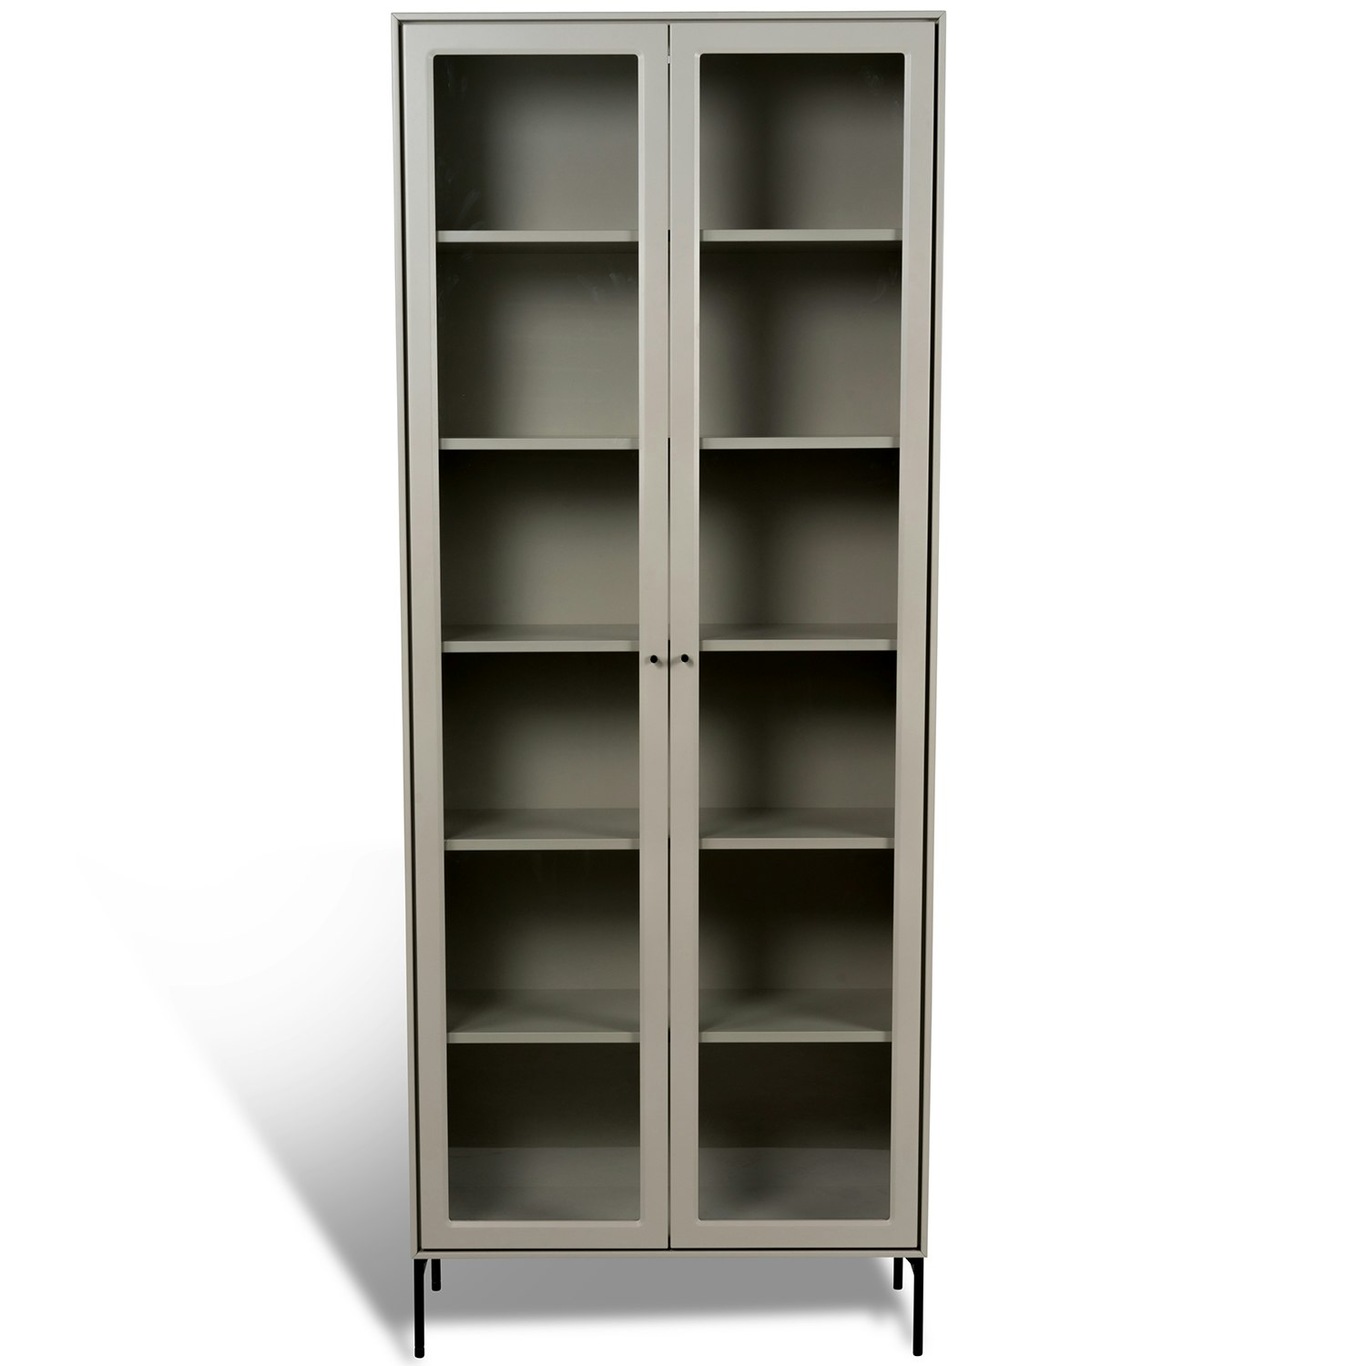 Volt Cabinet With Glass Doors 190 cm, Beige/Black